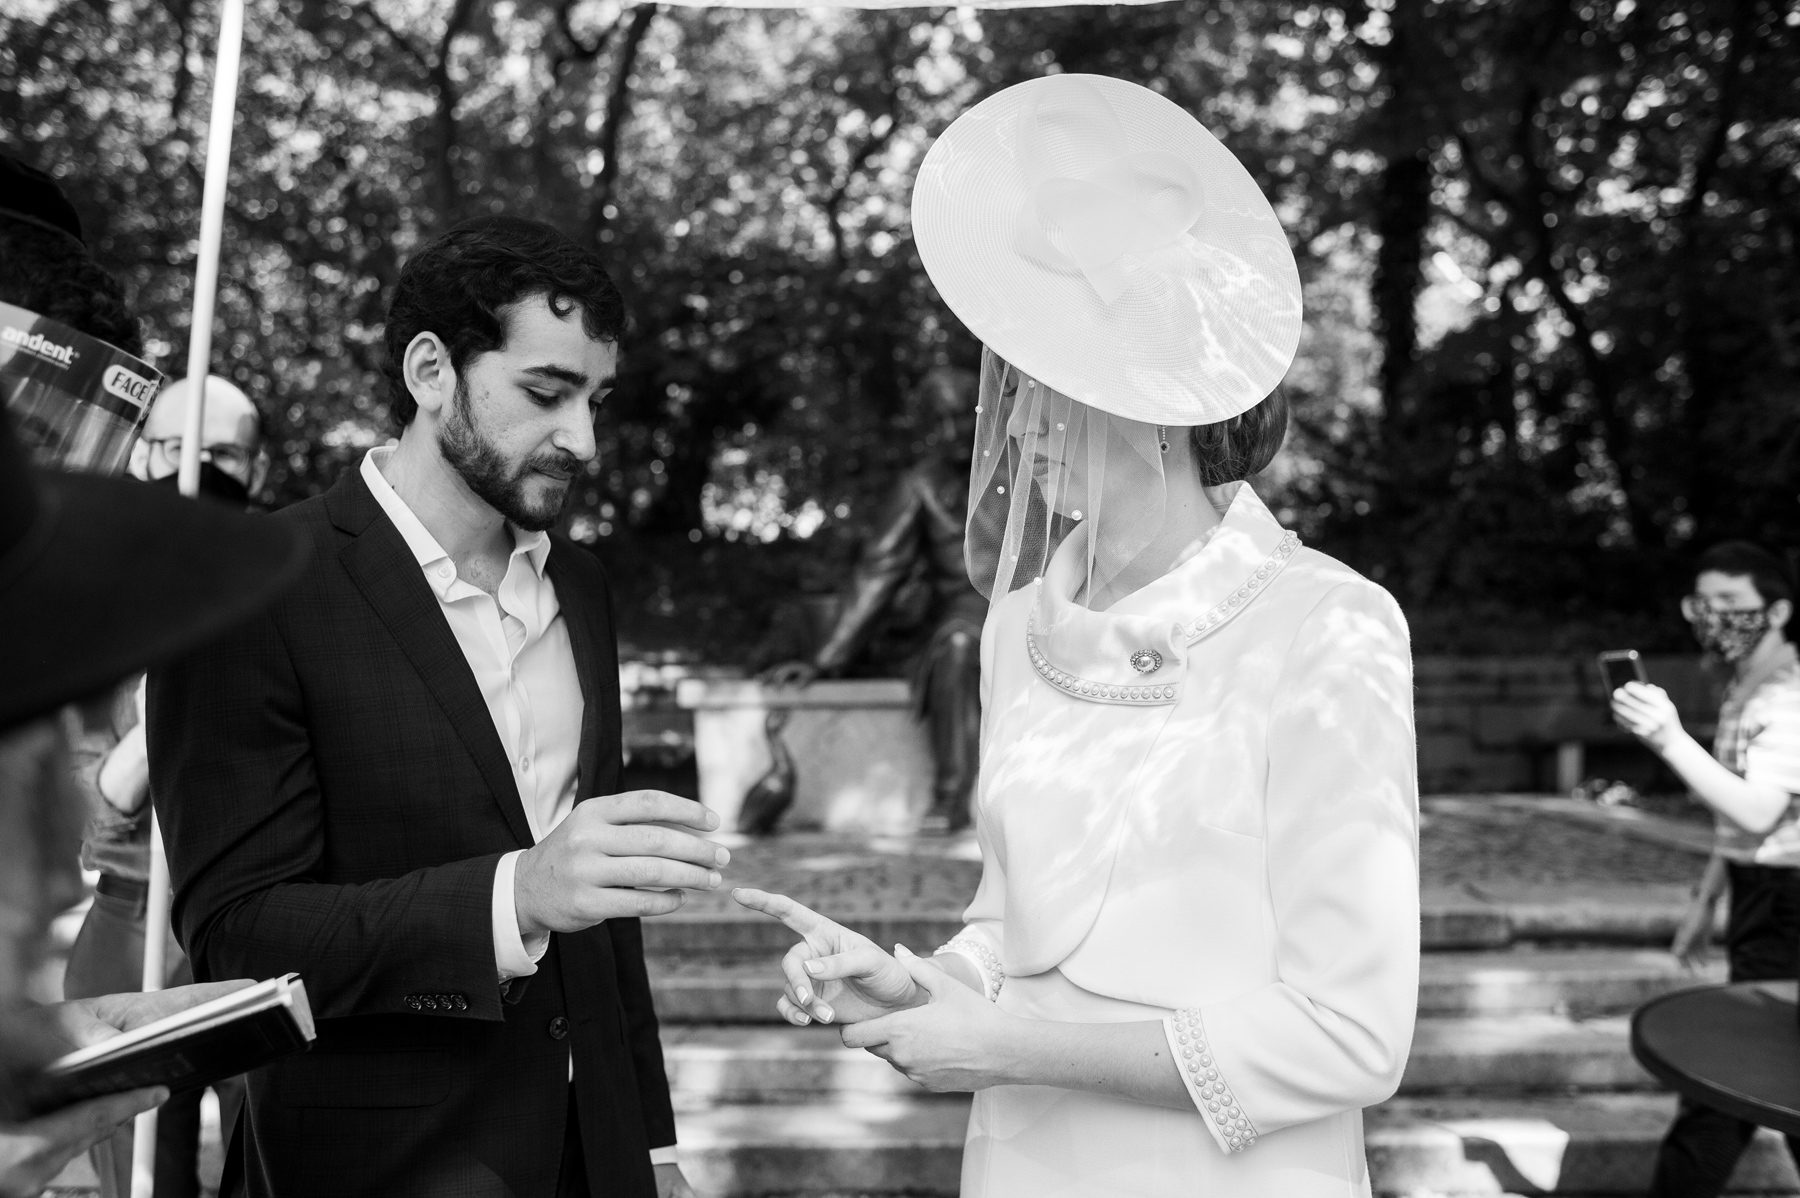 Exchanging Ring in Jewish Wedding Ceremony 